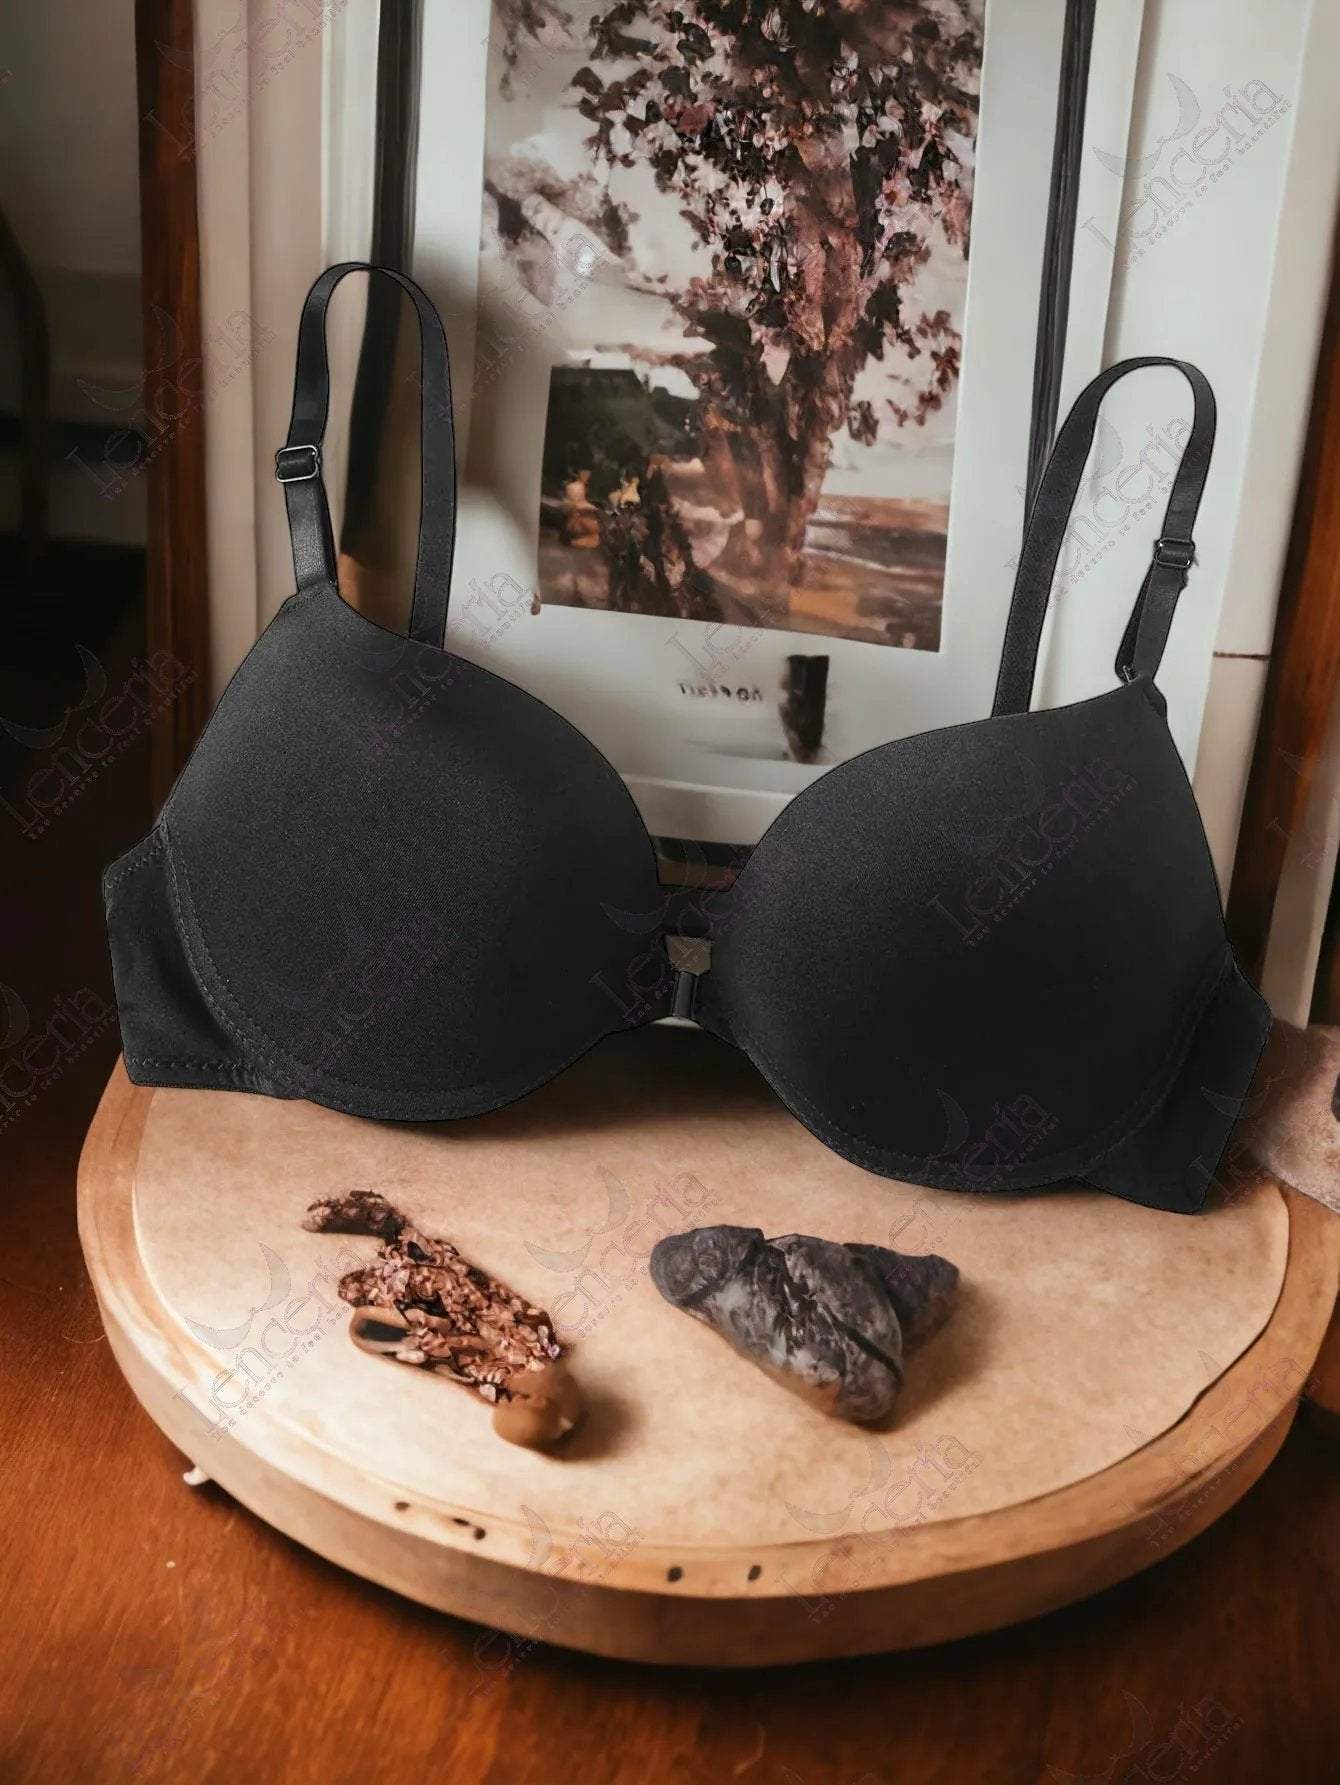 Cheriee everyday essentials Black plunge pushup bra - extremely